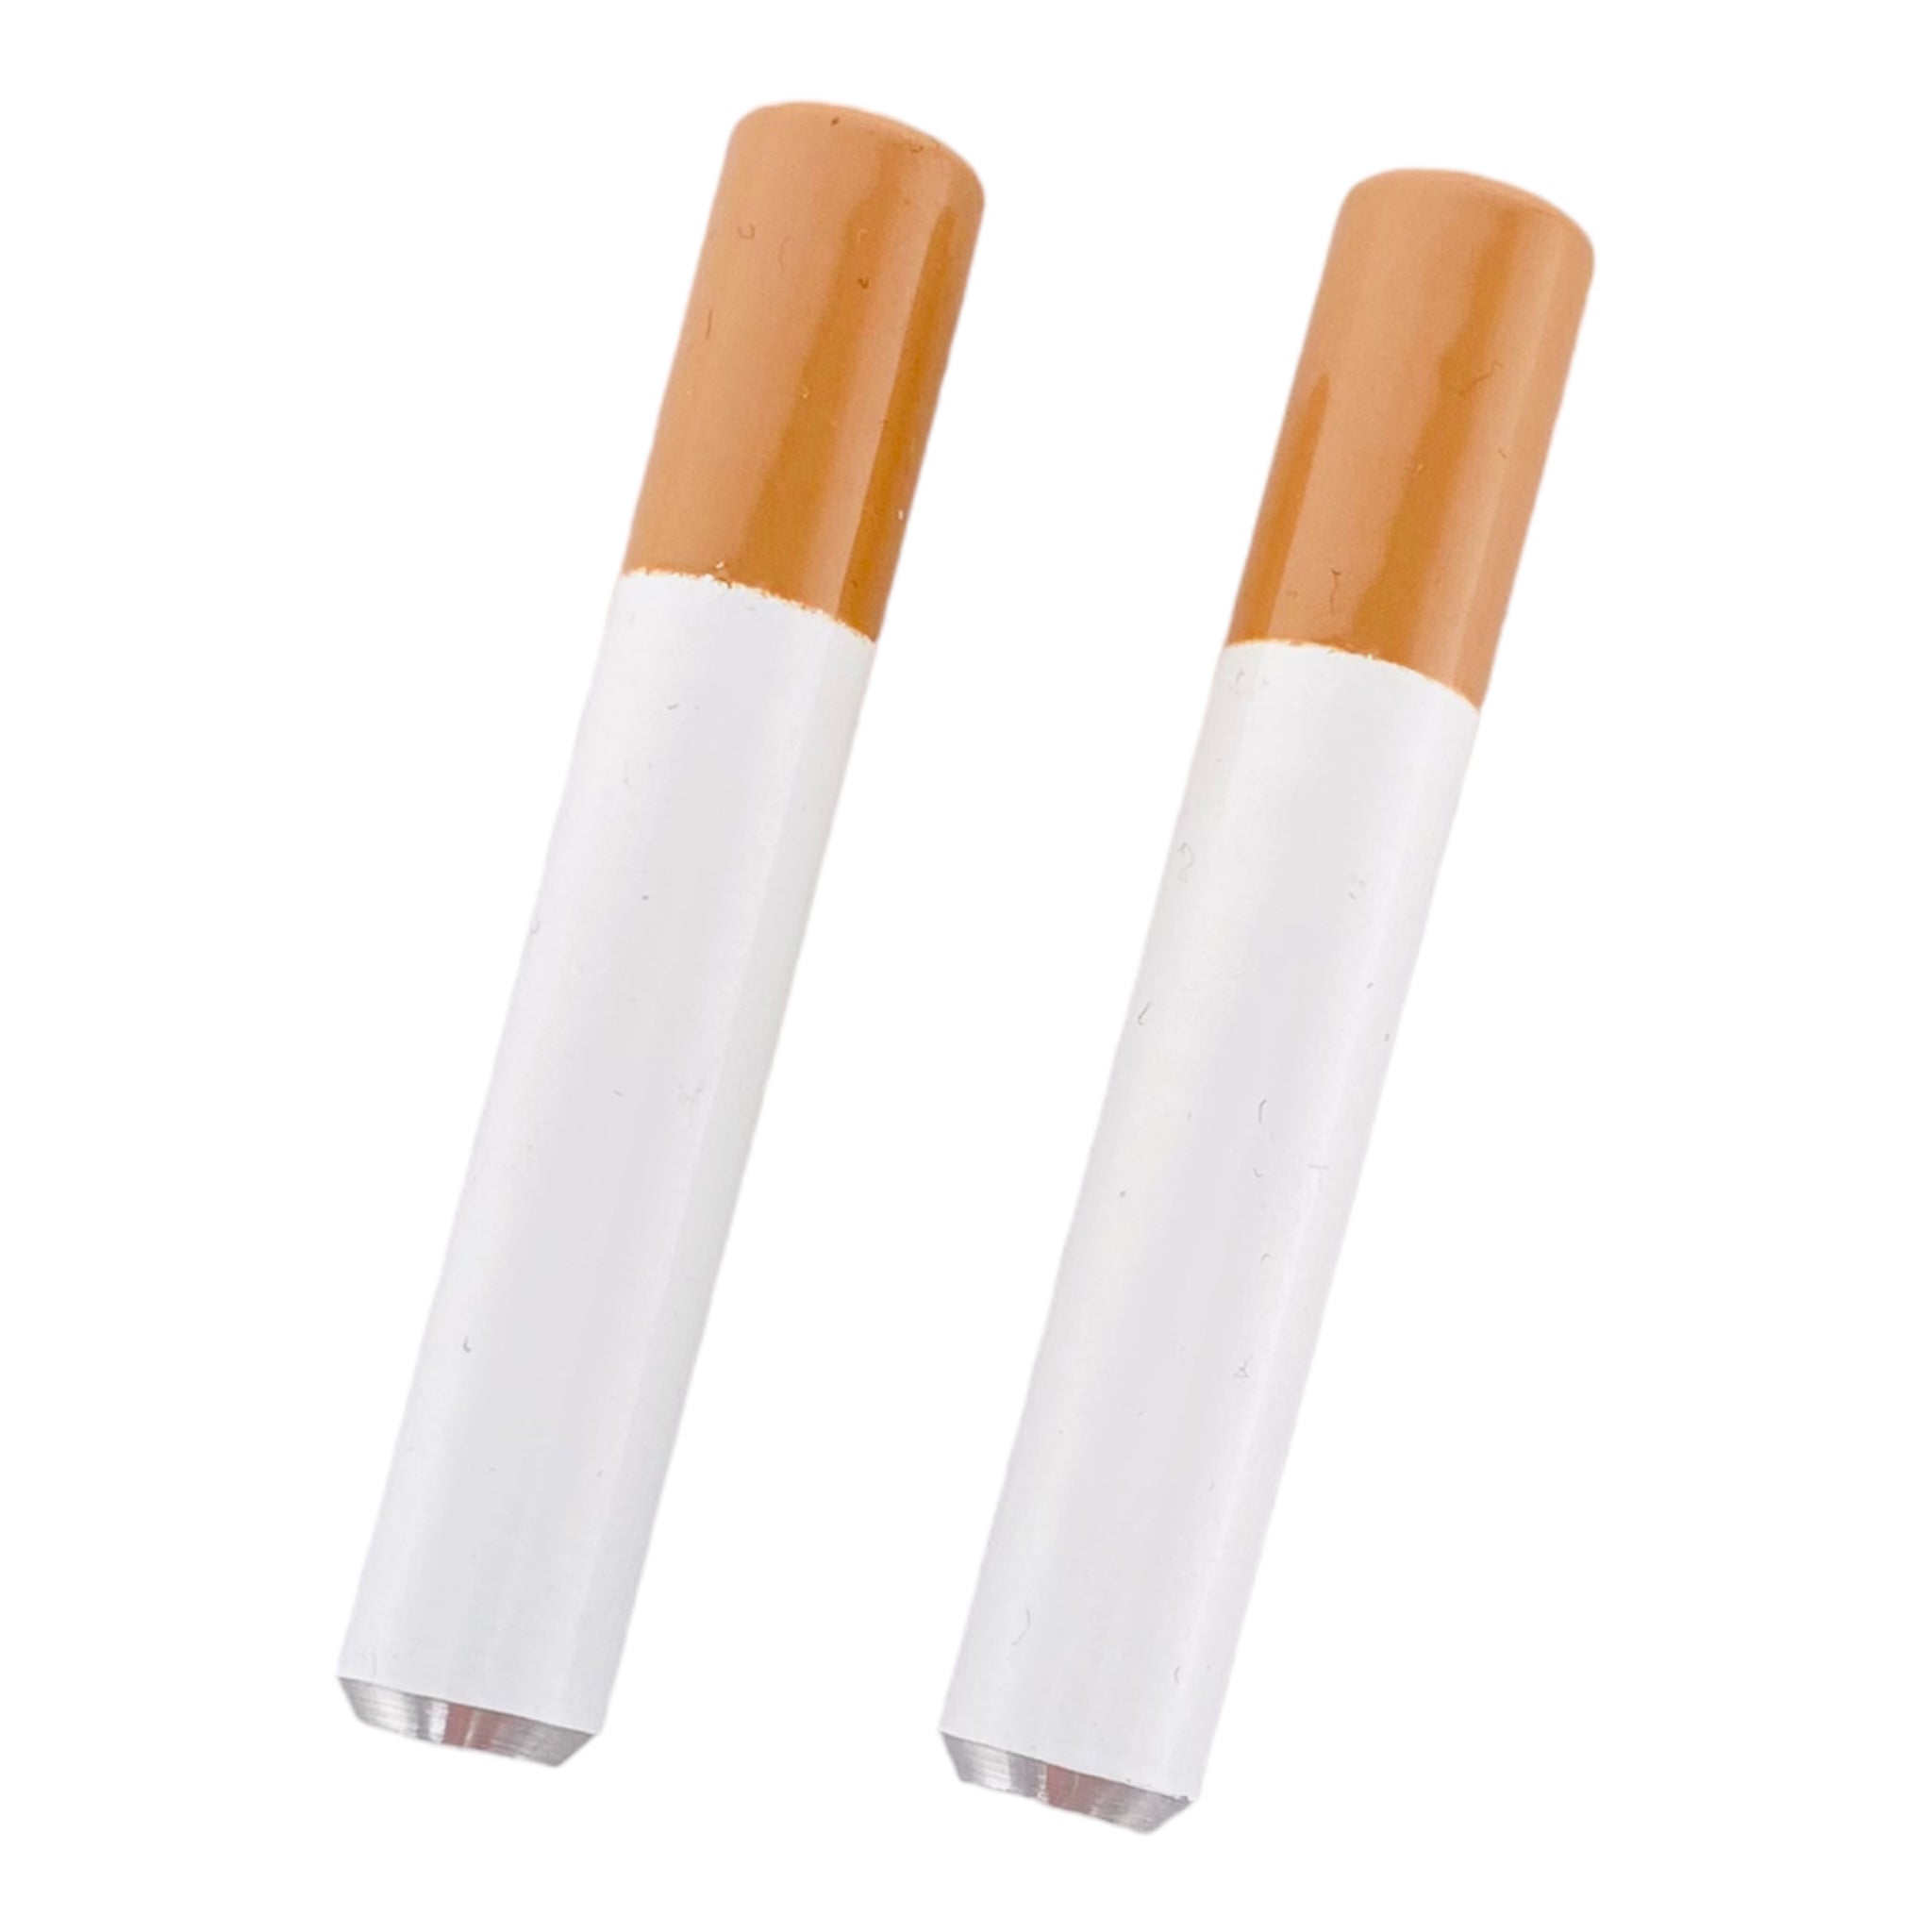 Small Metal Cigarette One Hitter Chillum - 2ct